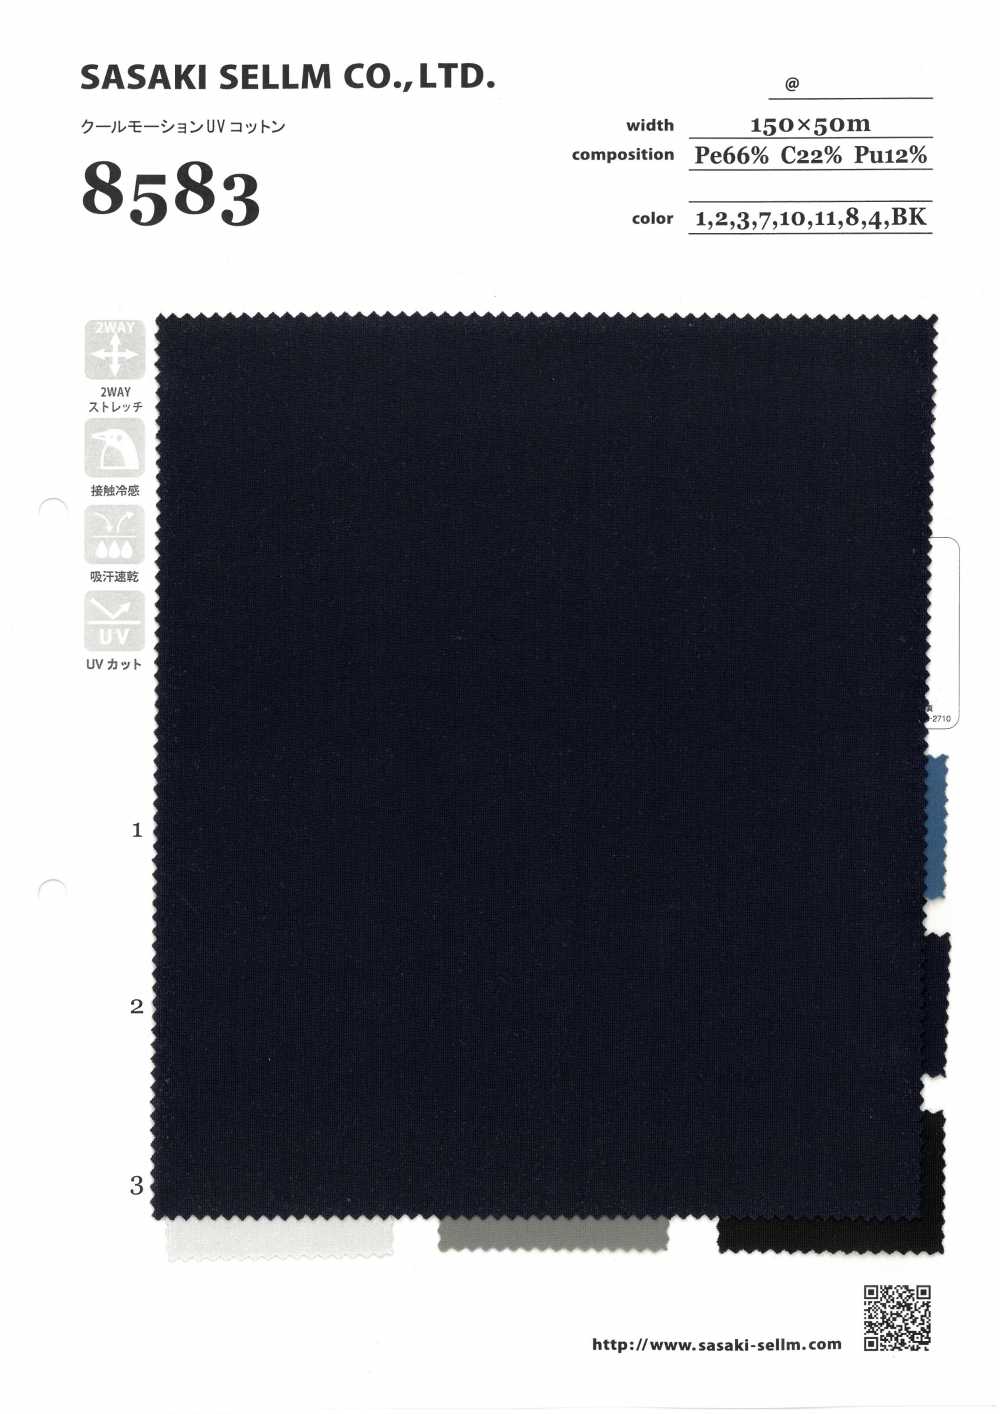 8583 Cool Motion UV Cotton[Textile / Fabric] SASAKISELLM